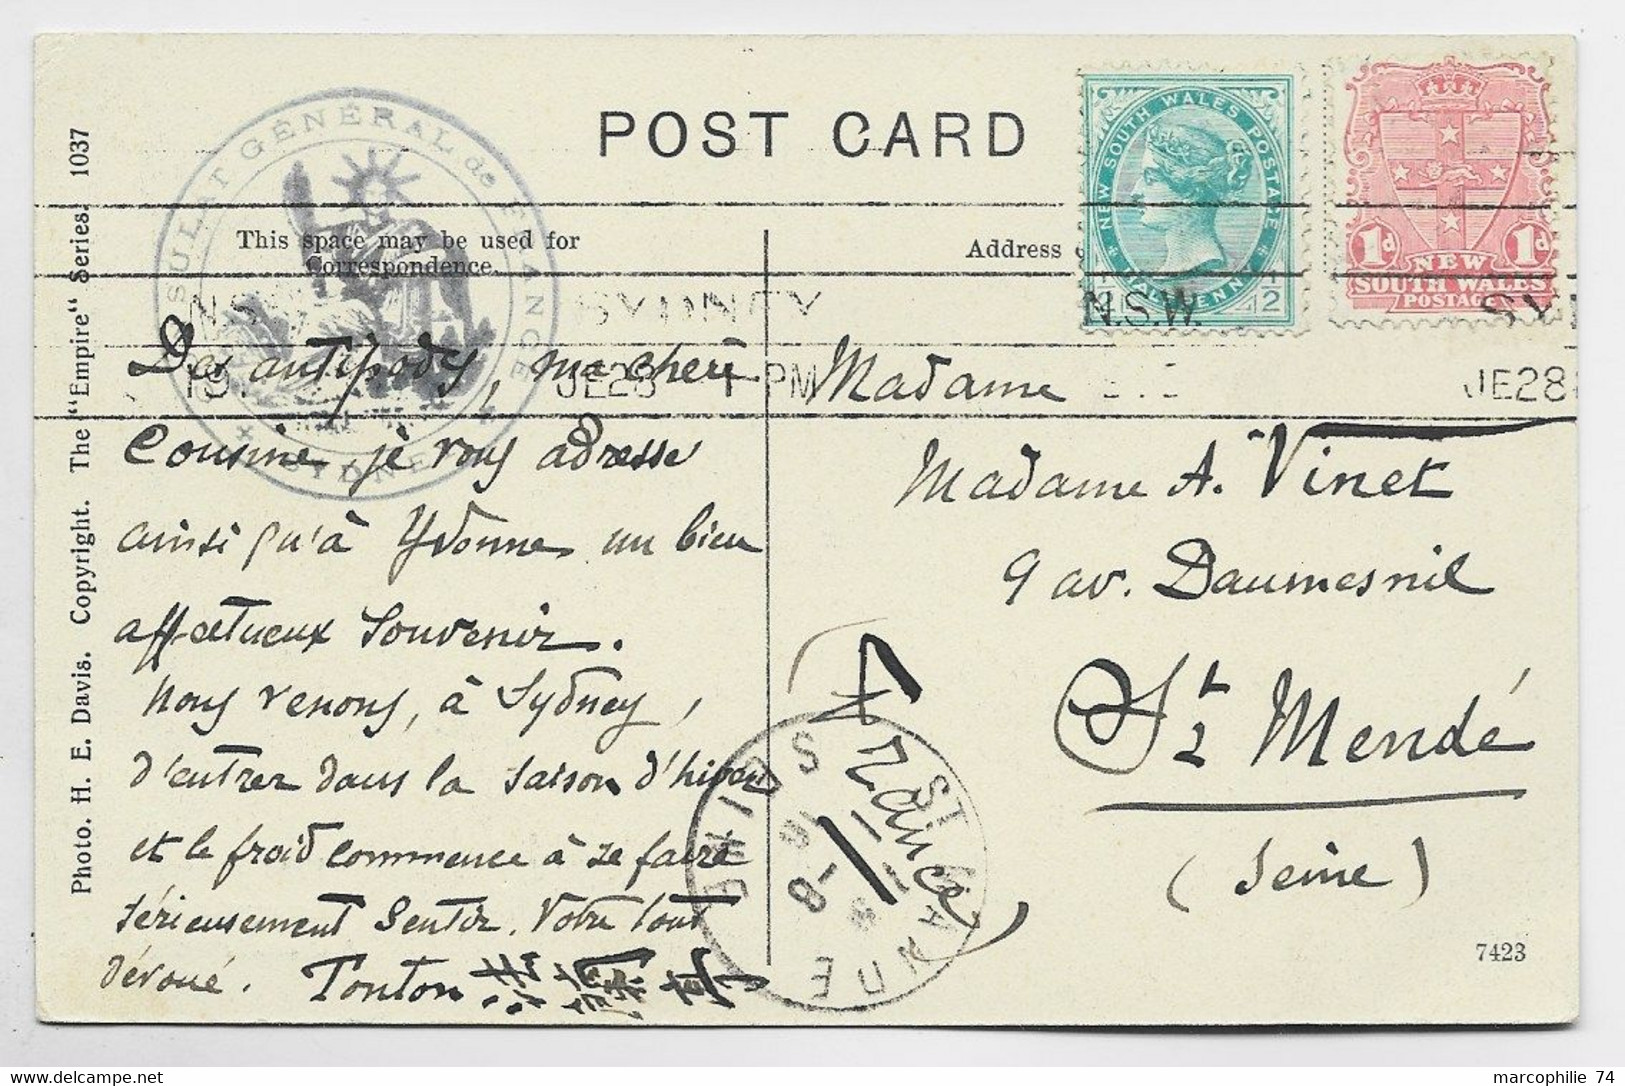 AUSTRALIA SOUTH WALES 1D+1/2C POST CARD SYDNEY 1916+ CONSULAT GENERAL DE FRANCE SYDNEY - Briefe U. Dokumente